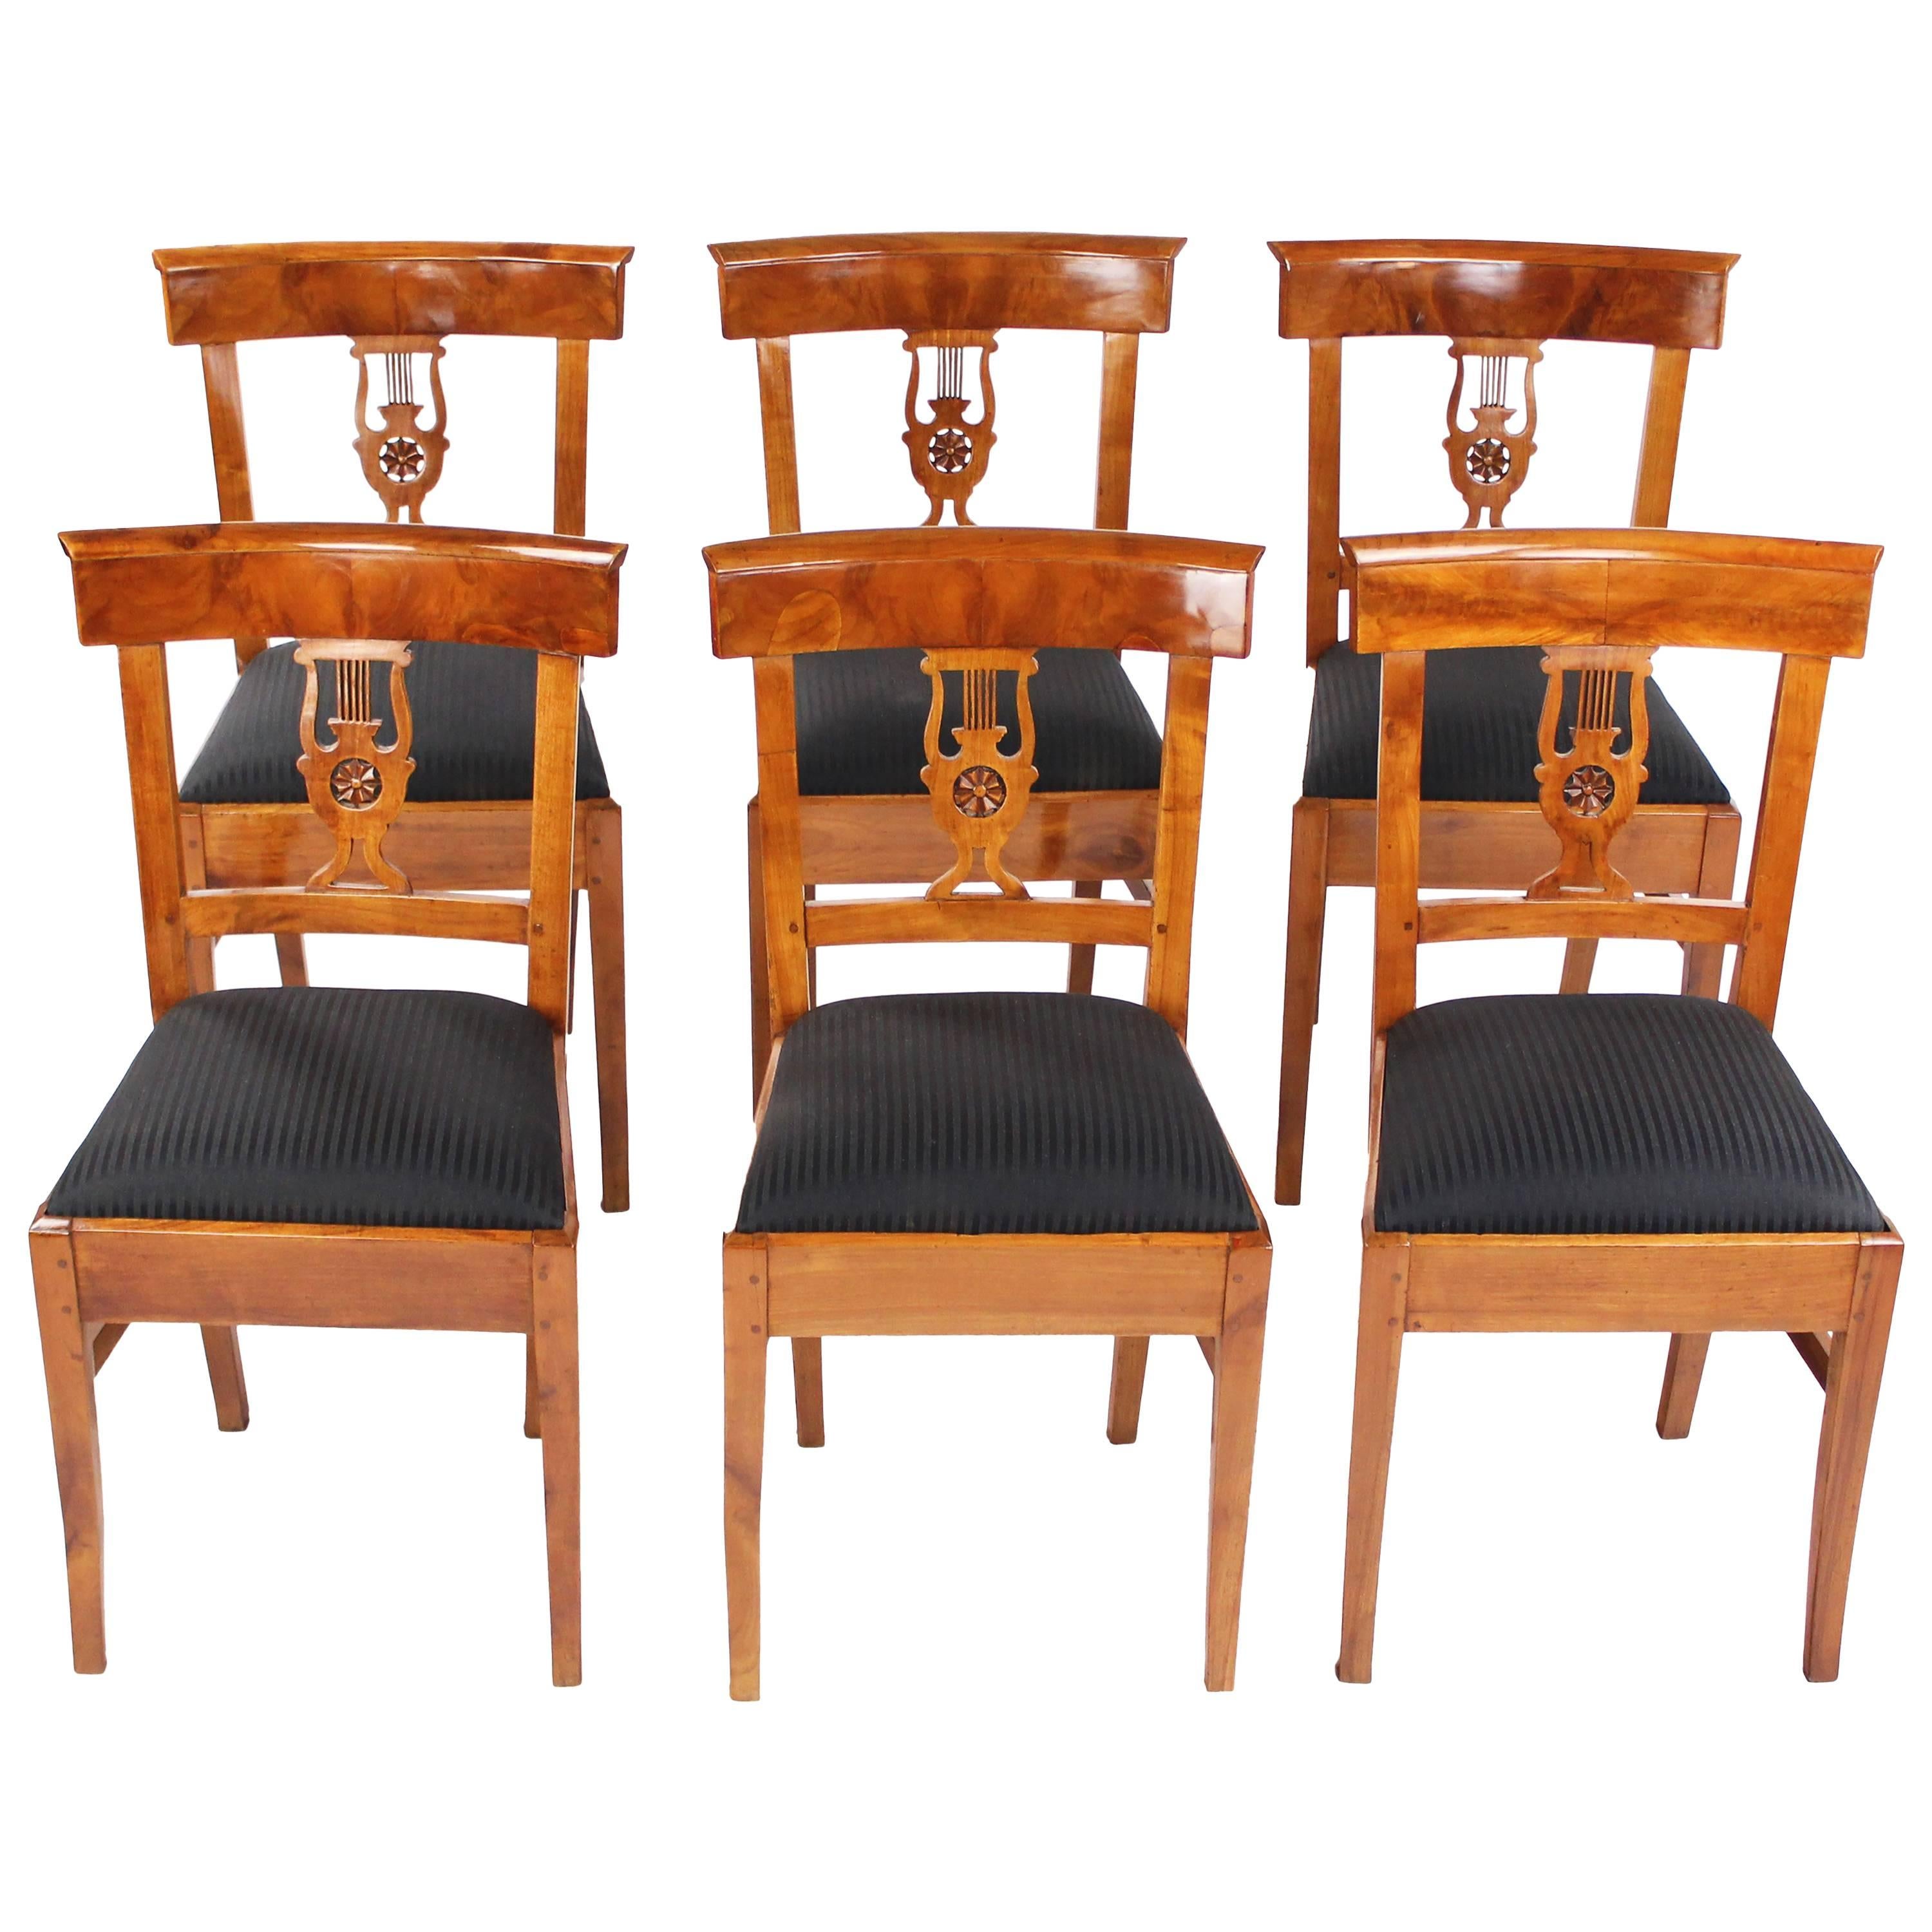 Very Rare Set of Six Biedermeier Period Chairs, circa 1830, Cherry Tree, Lyra